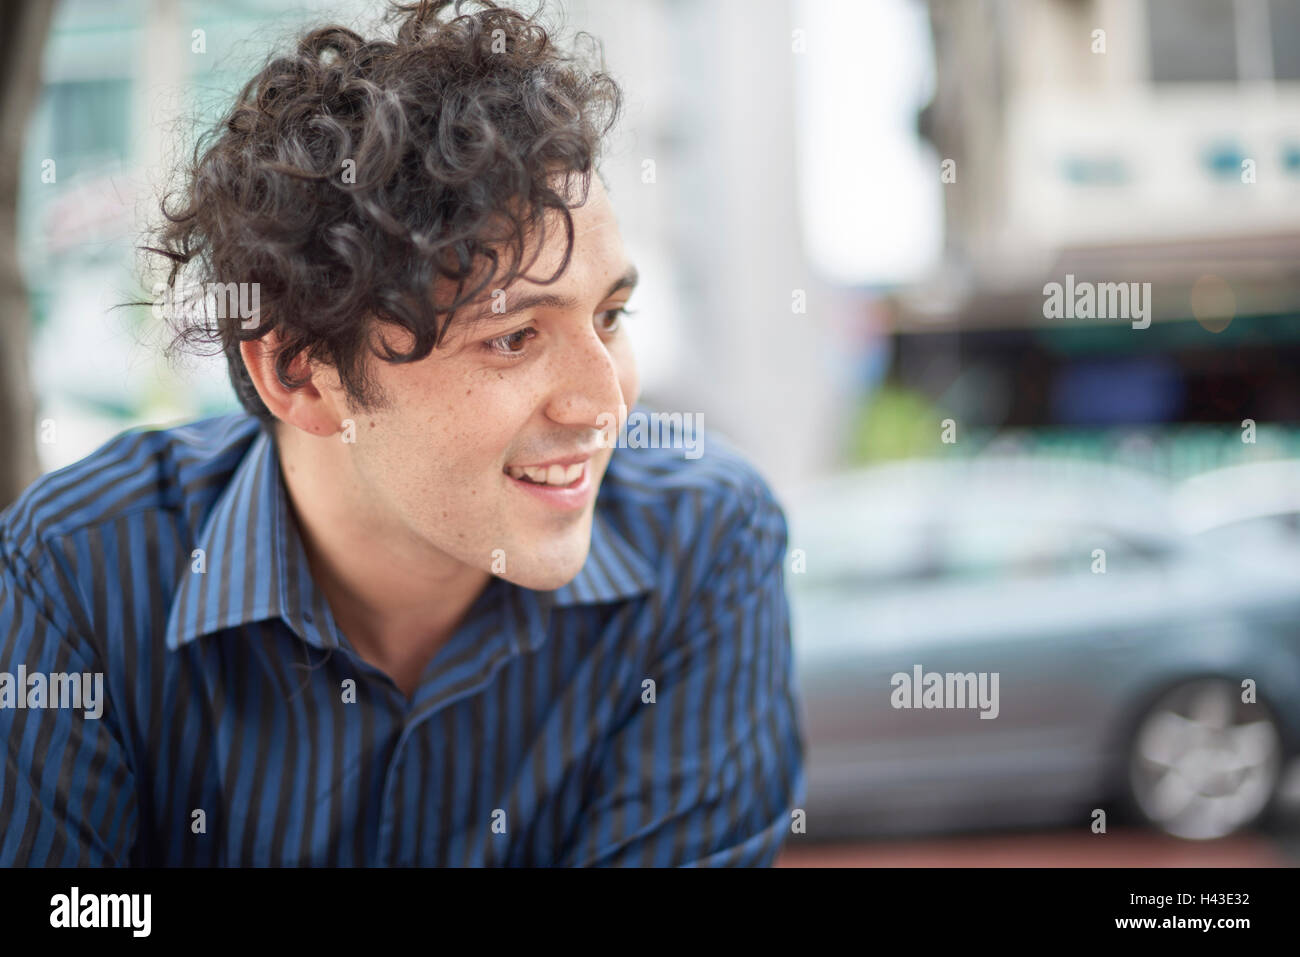 Smiling Hispanic man with curly hair Stock Photo